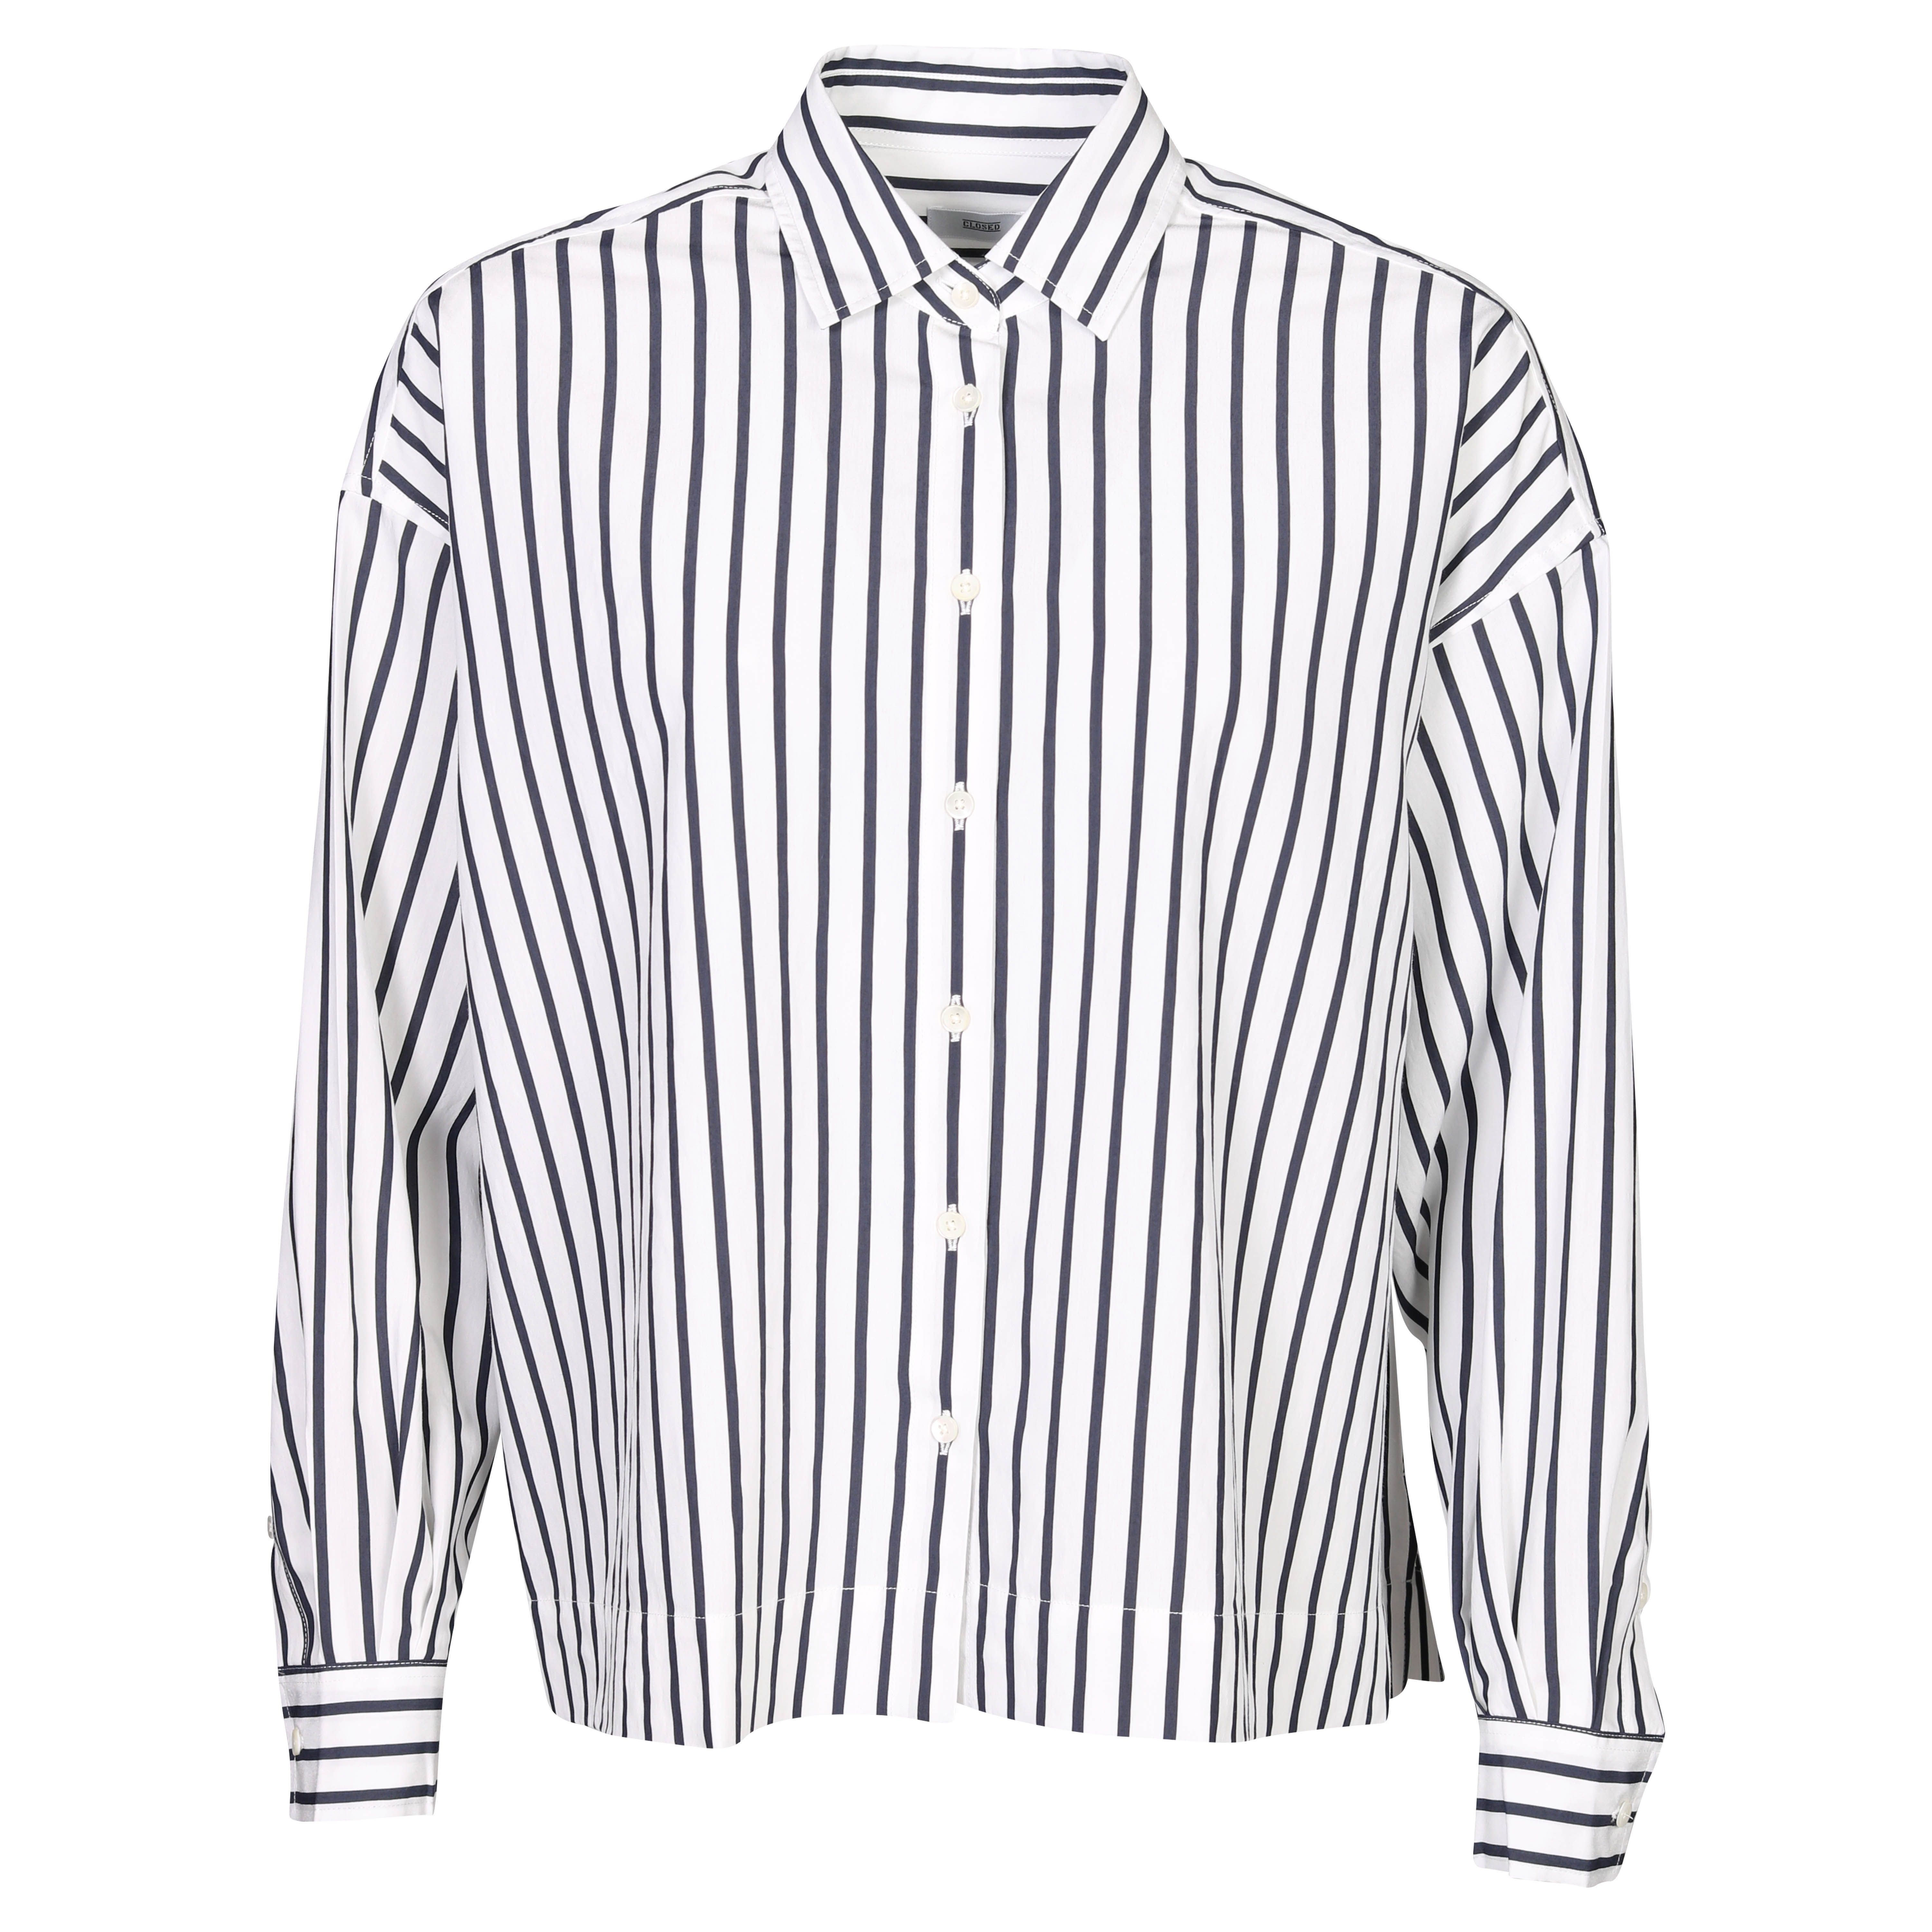 Closed Owen Gathered Shirt in dark night striped XXS